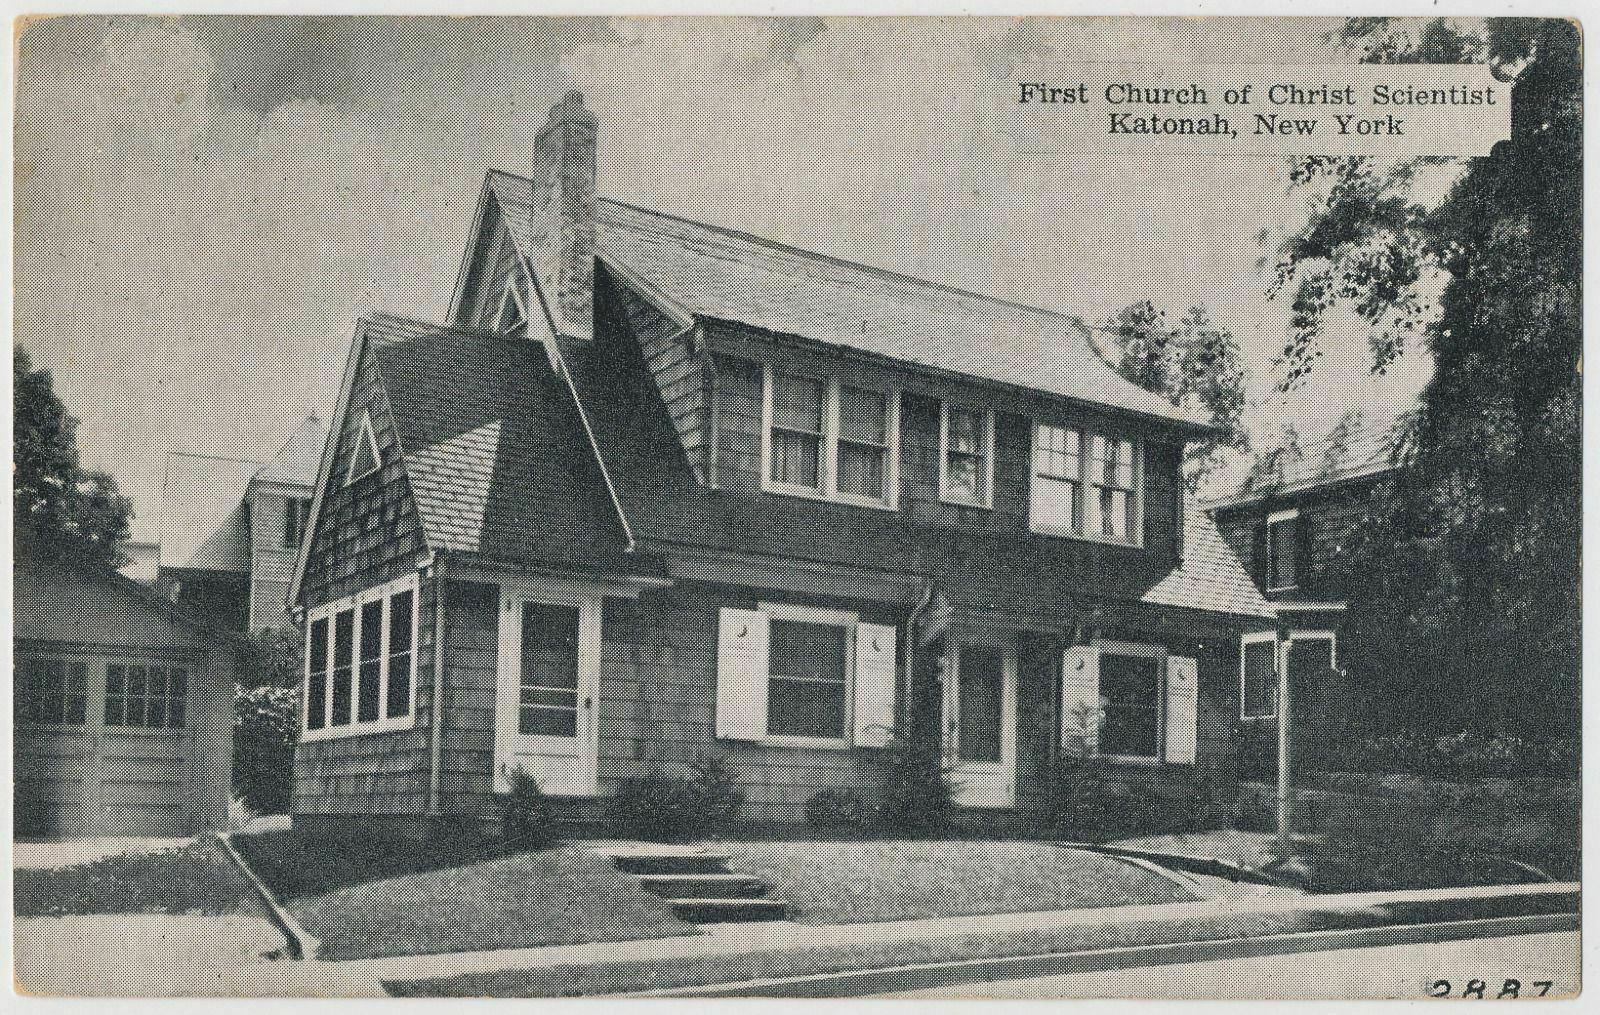 First Church of Christ Scientist, Katonah, New York